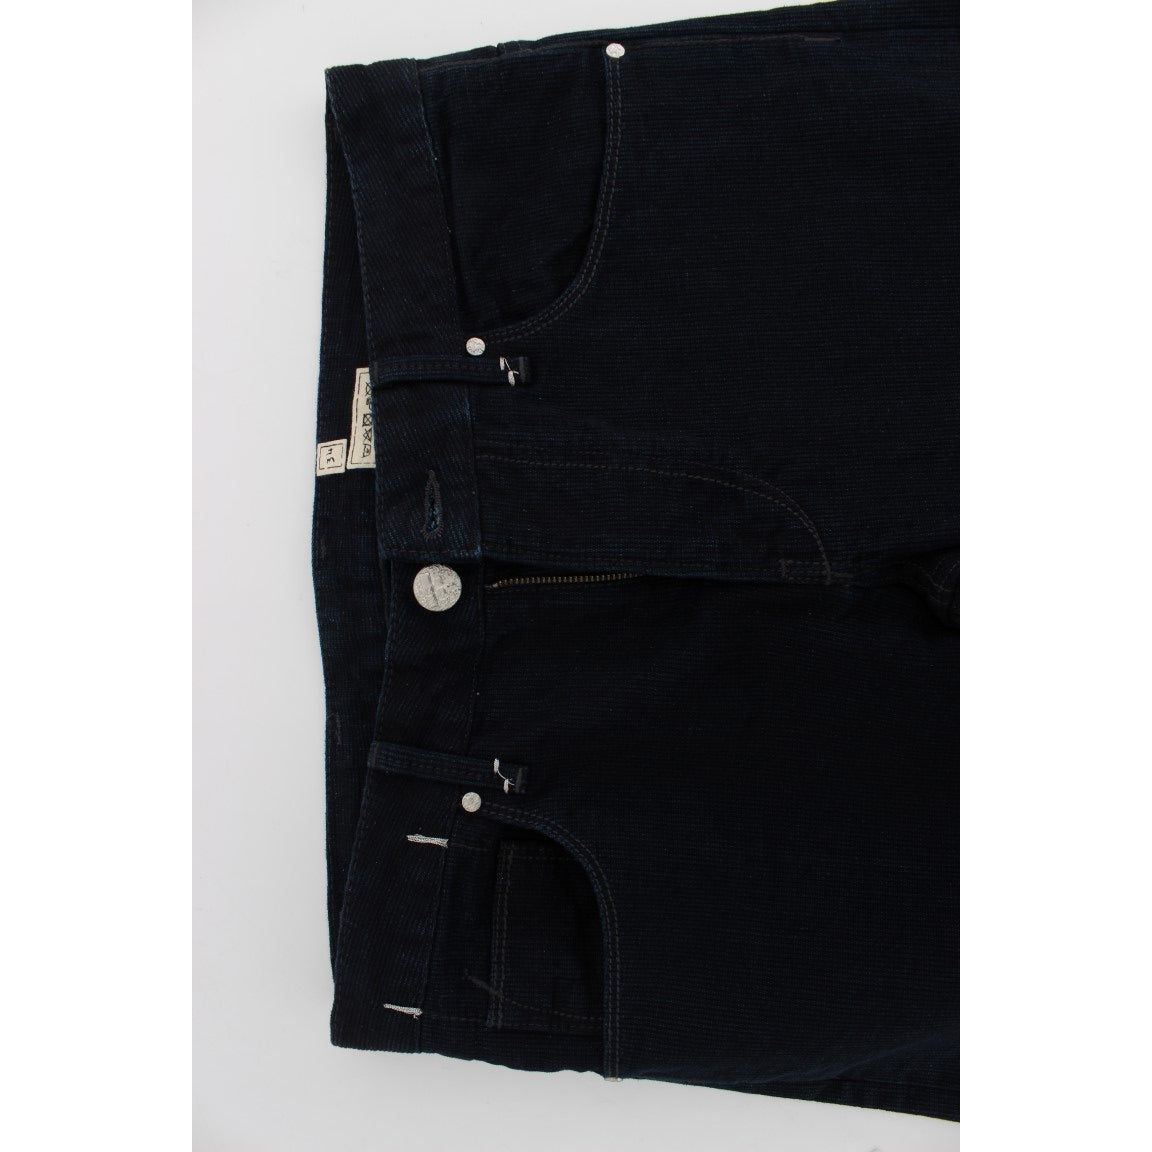 Acht Exquisite Slim Skinny Fit Men's Jeans dark-blue-corduroy-slim-skinny-fit-jeans 298973-dark-blue-corduroy-slim-skinny-fit-jeans-4.jpg